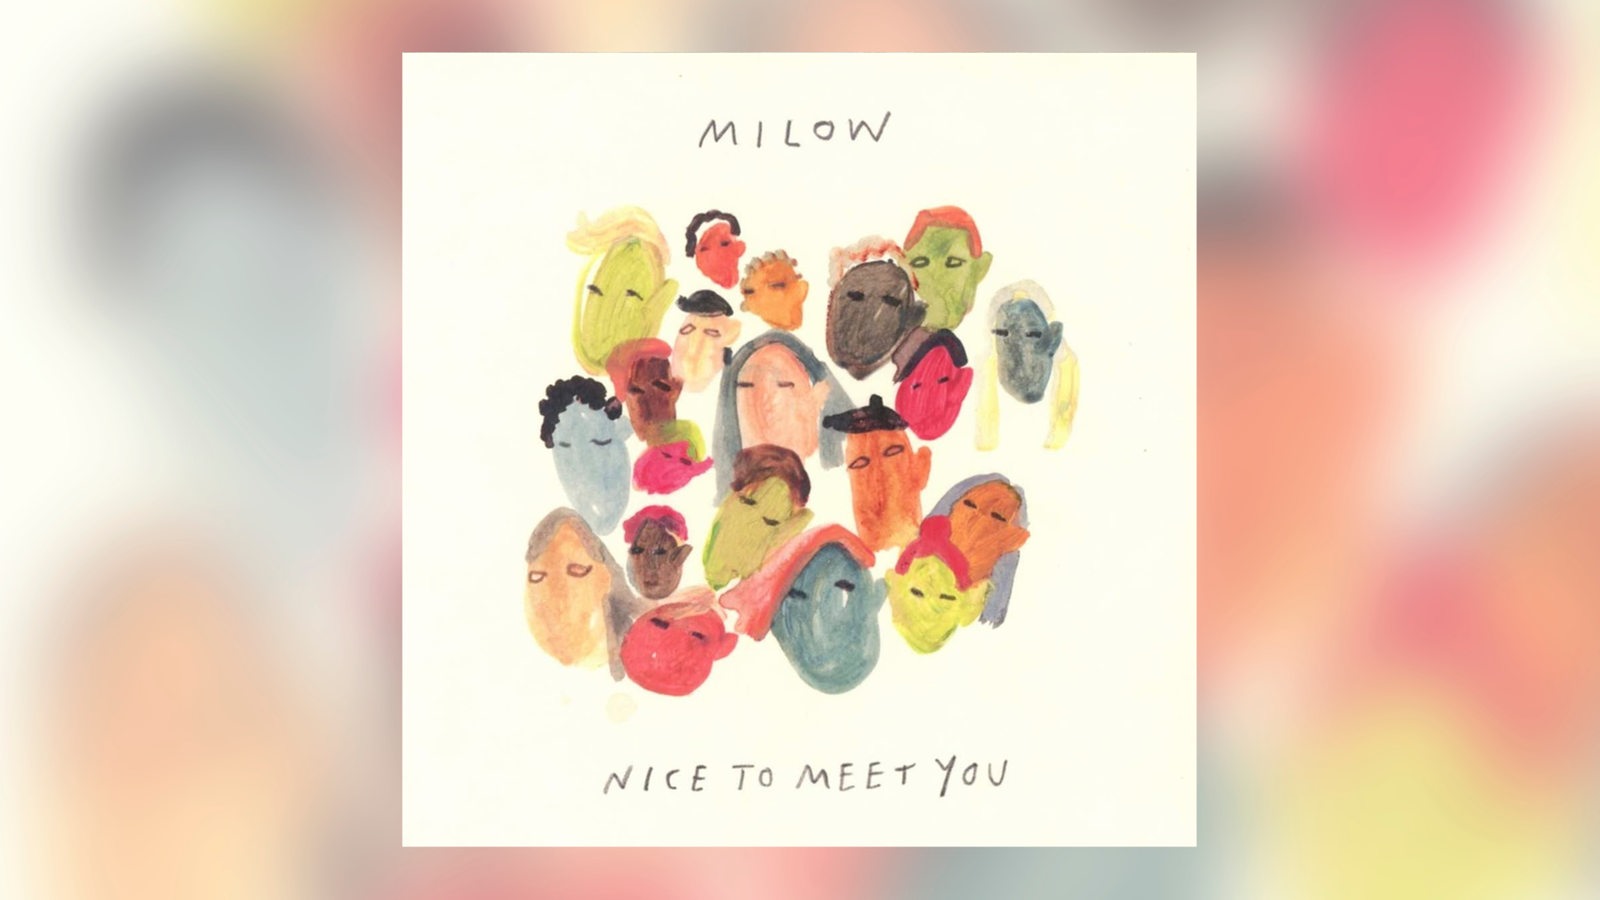 Albumcover Milow "Nice To Meet You"